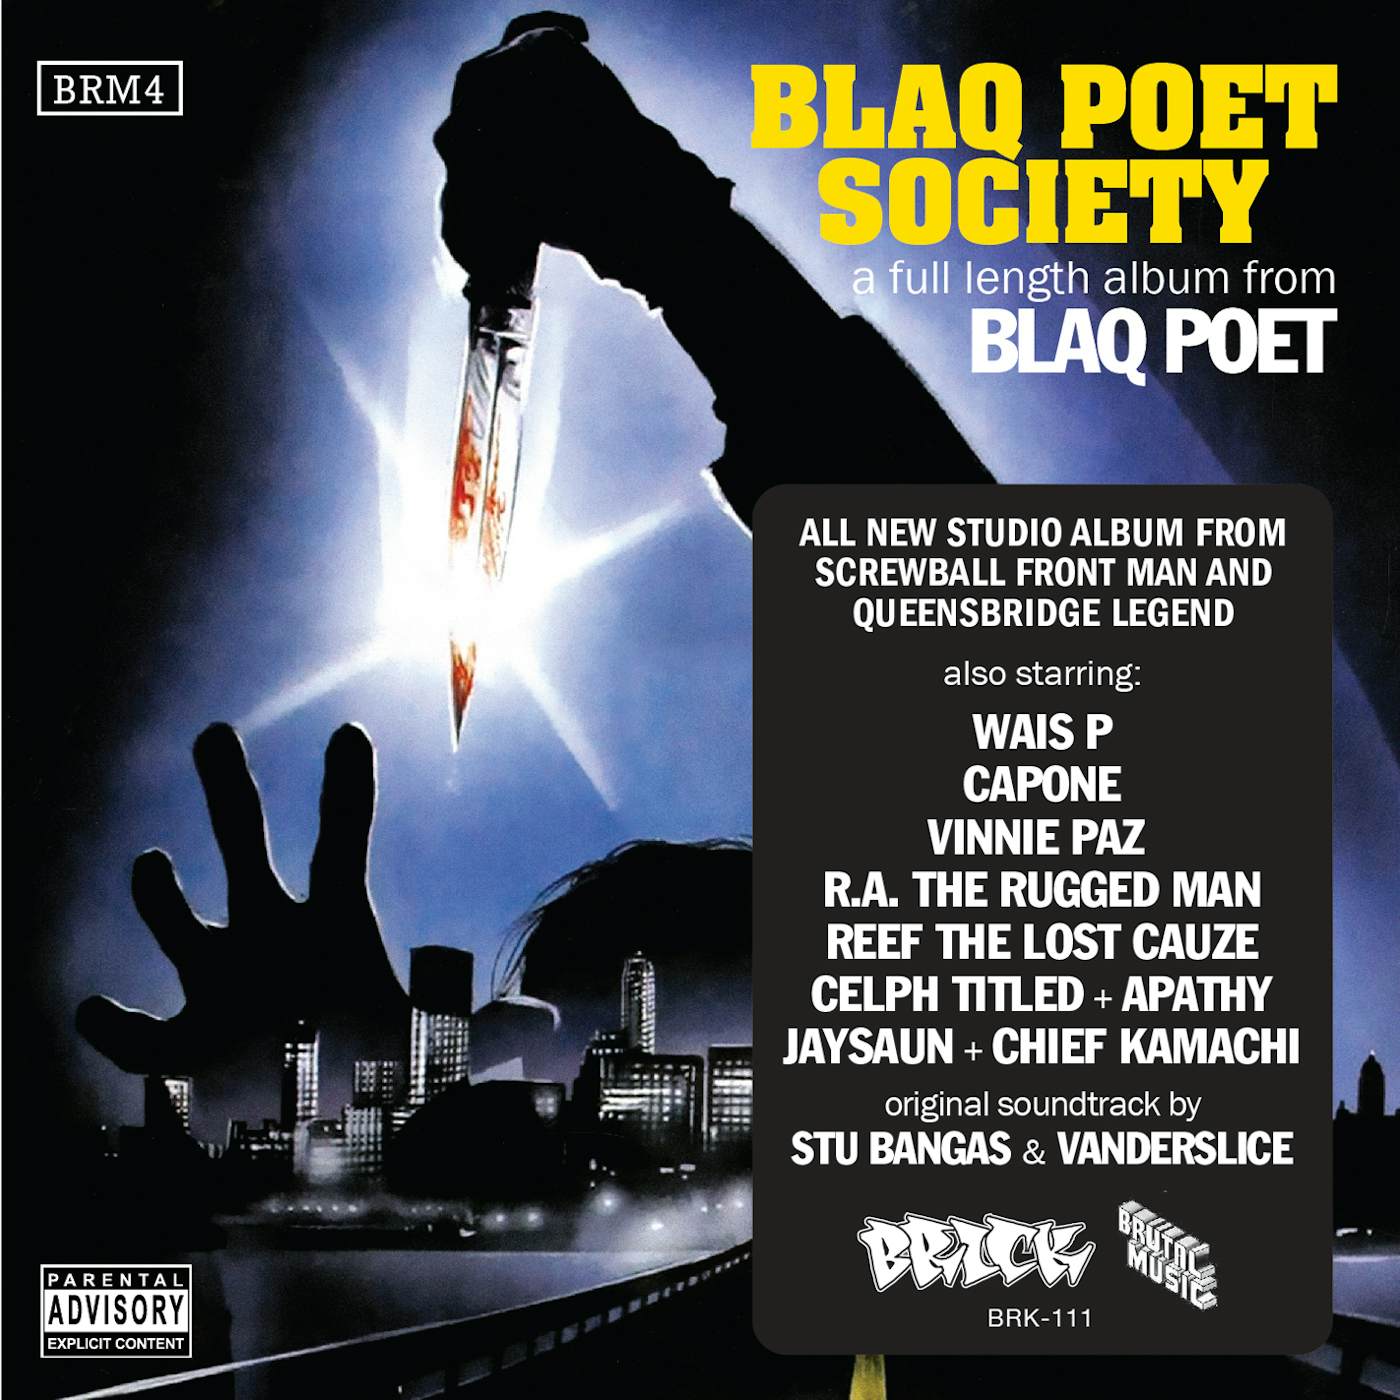 BLAQ POET SOCIETY CD